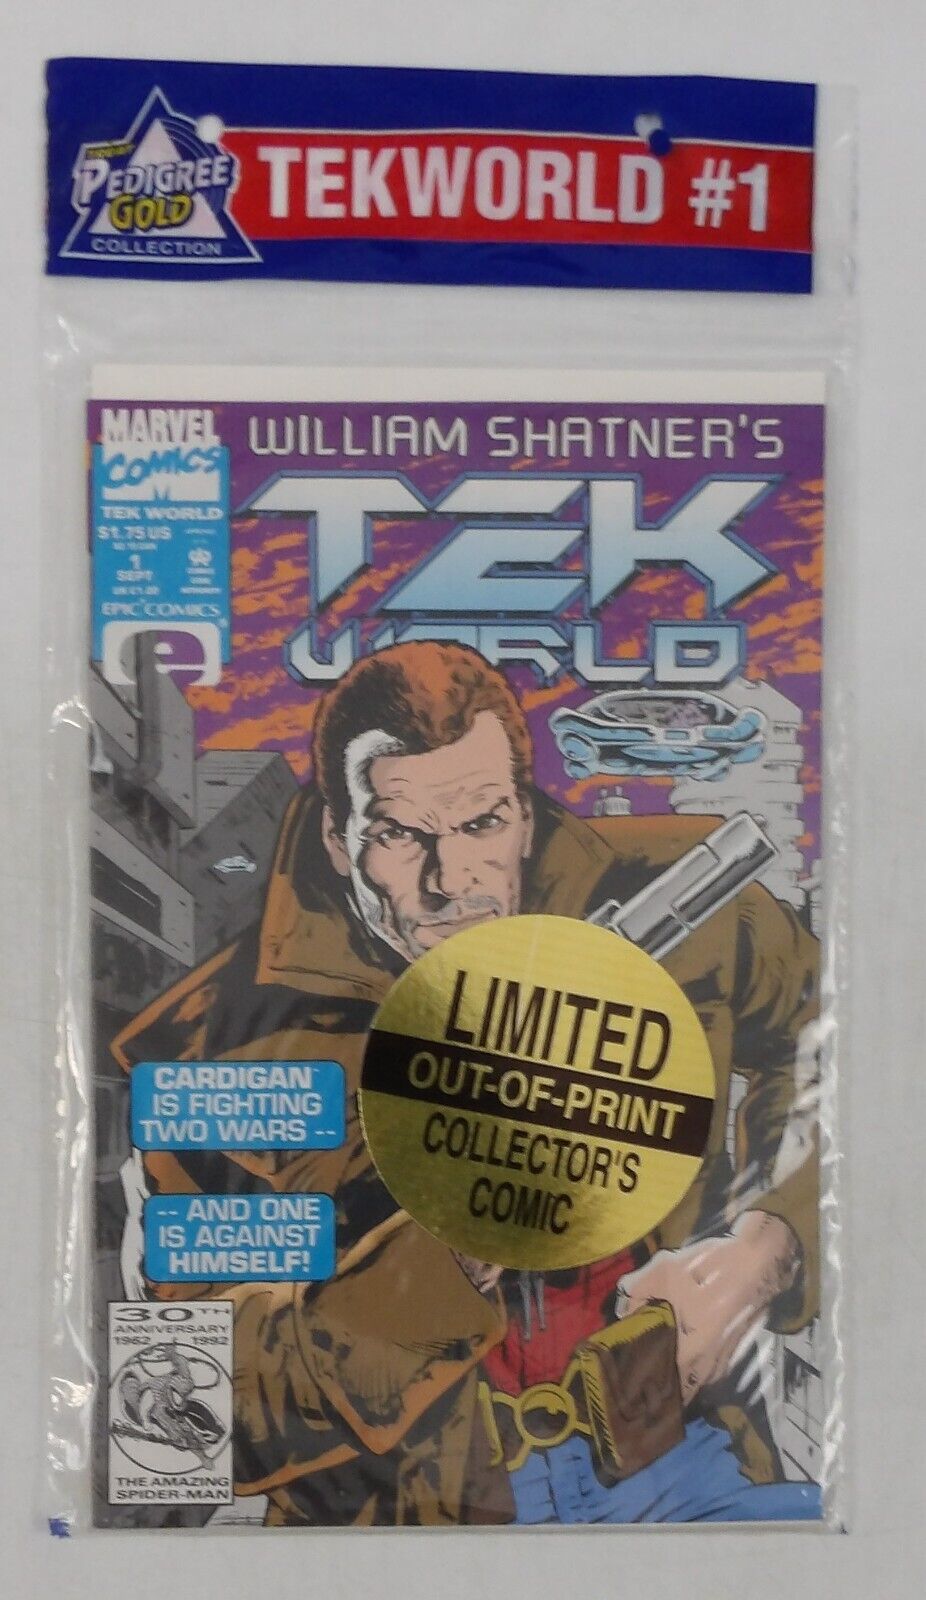 William Shatner's TekWorld #1 VF/NM Treat Pedigree Gold Collection SEALED comic